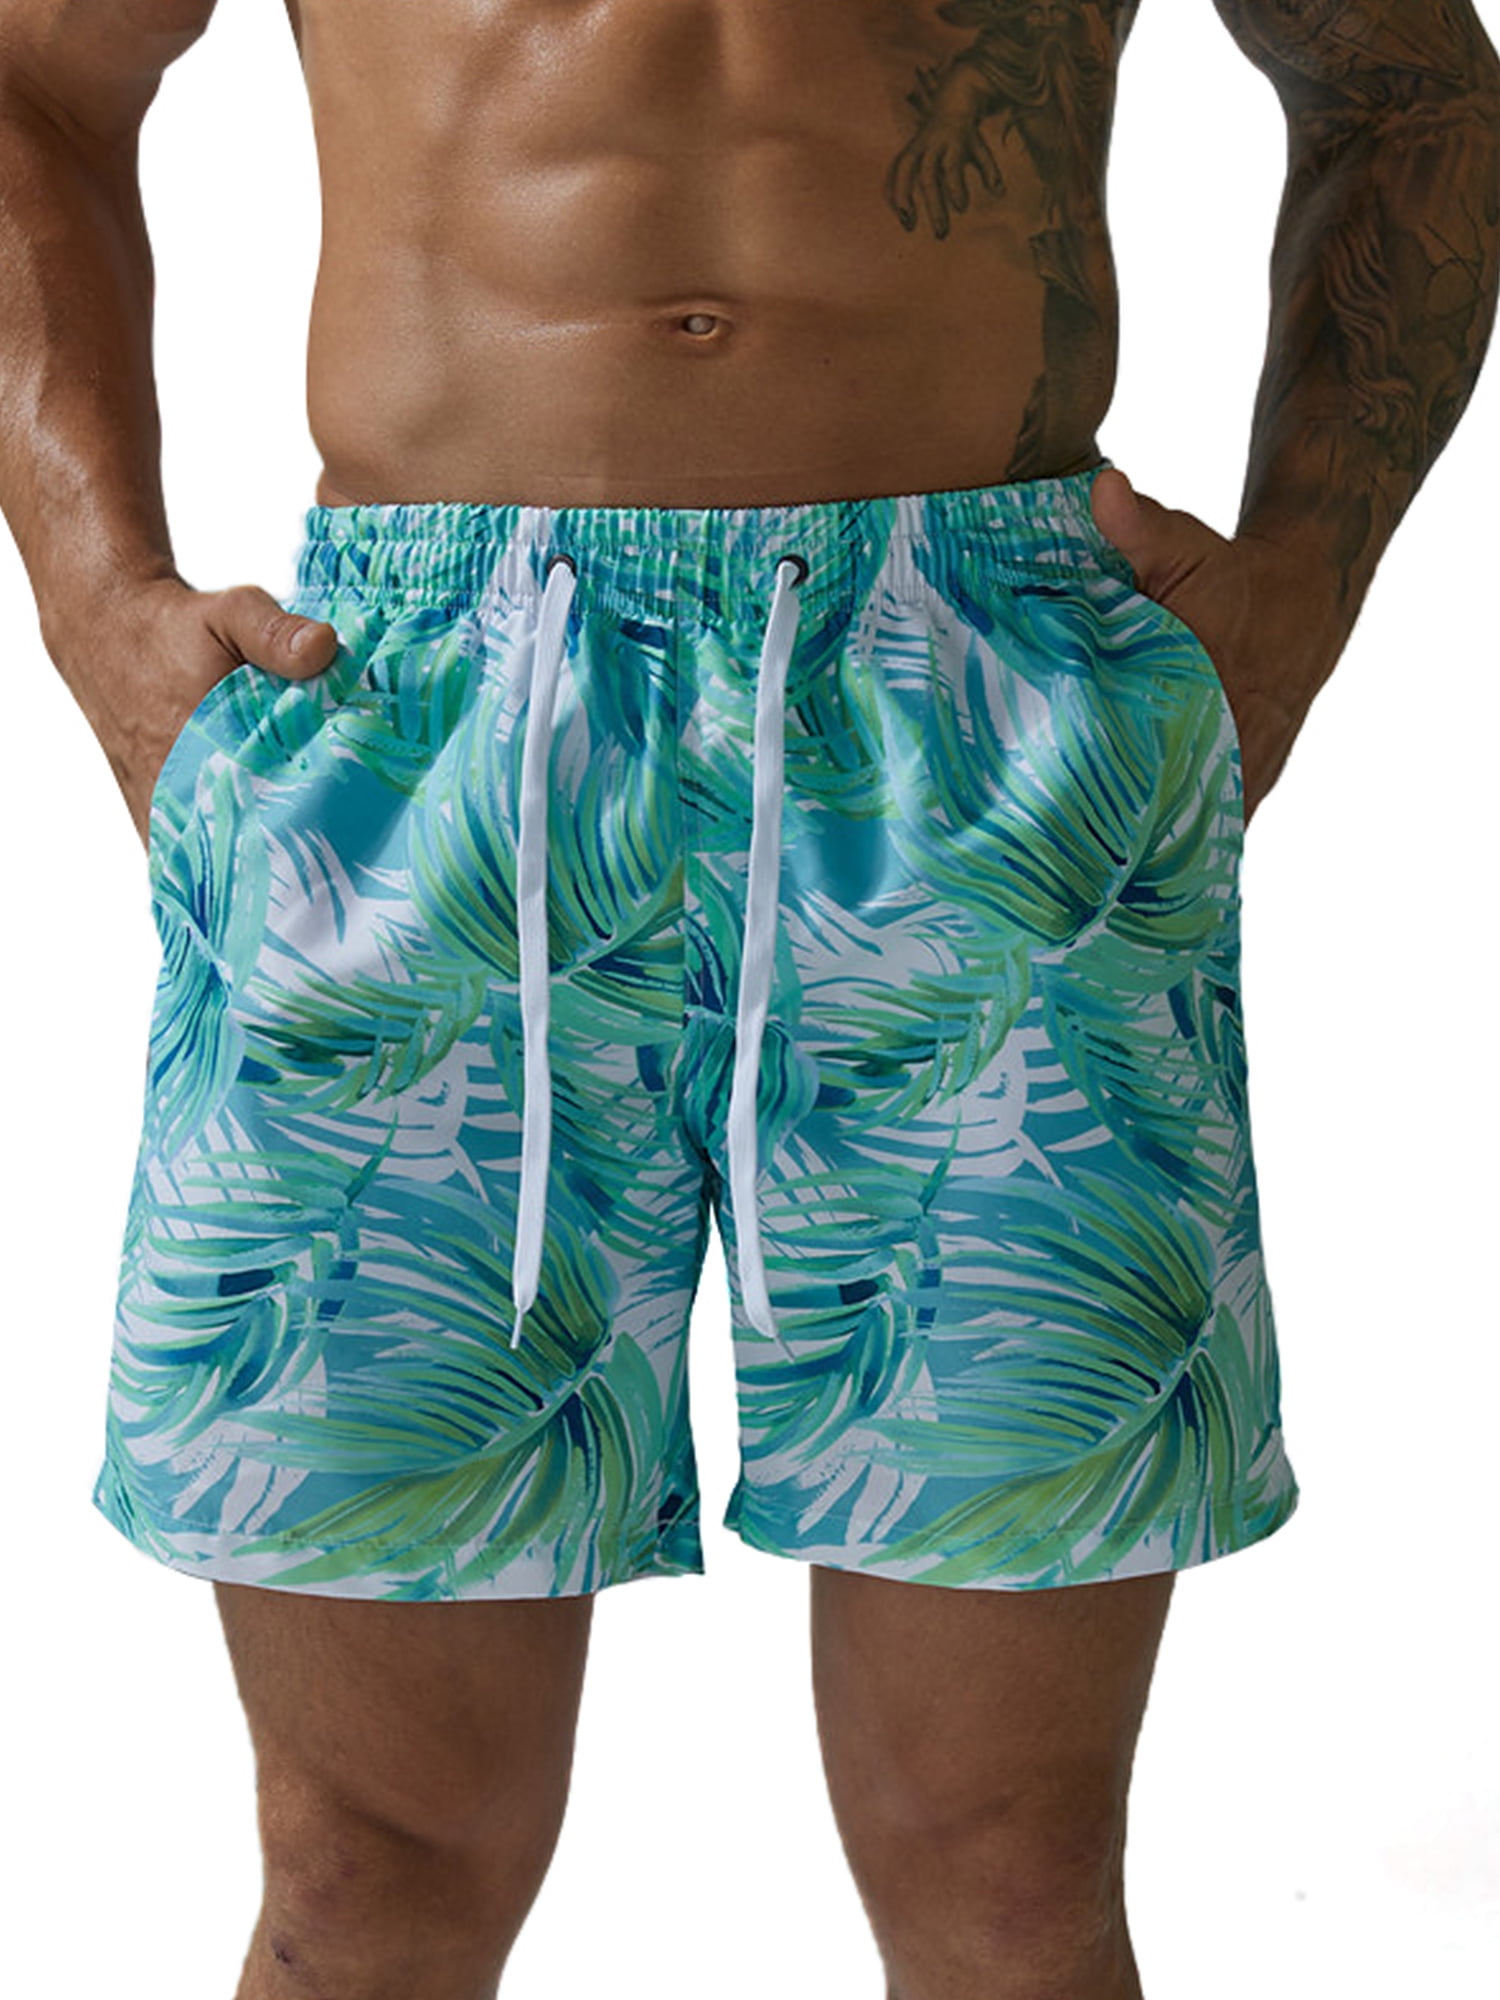 Mens Beach Shorts Quick Dry Cartoon Owl Summer Holiday Mesh Lining Swimwear Board Shorts with Pockets 